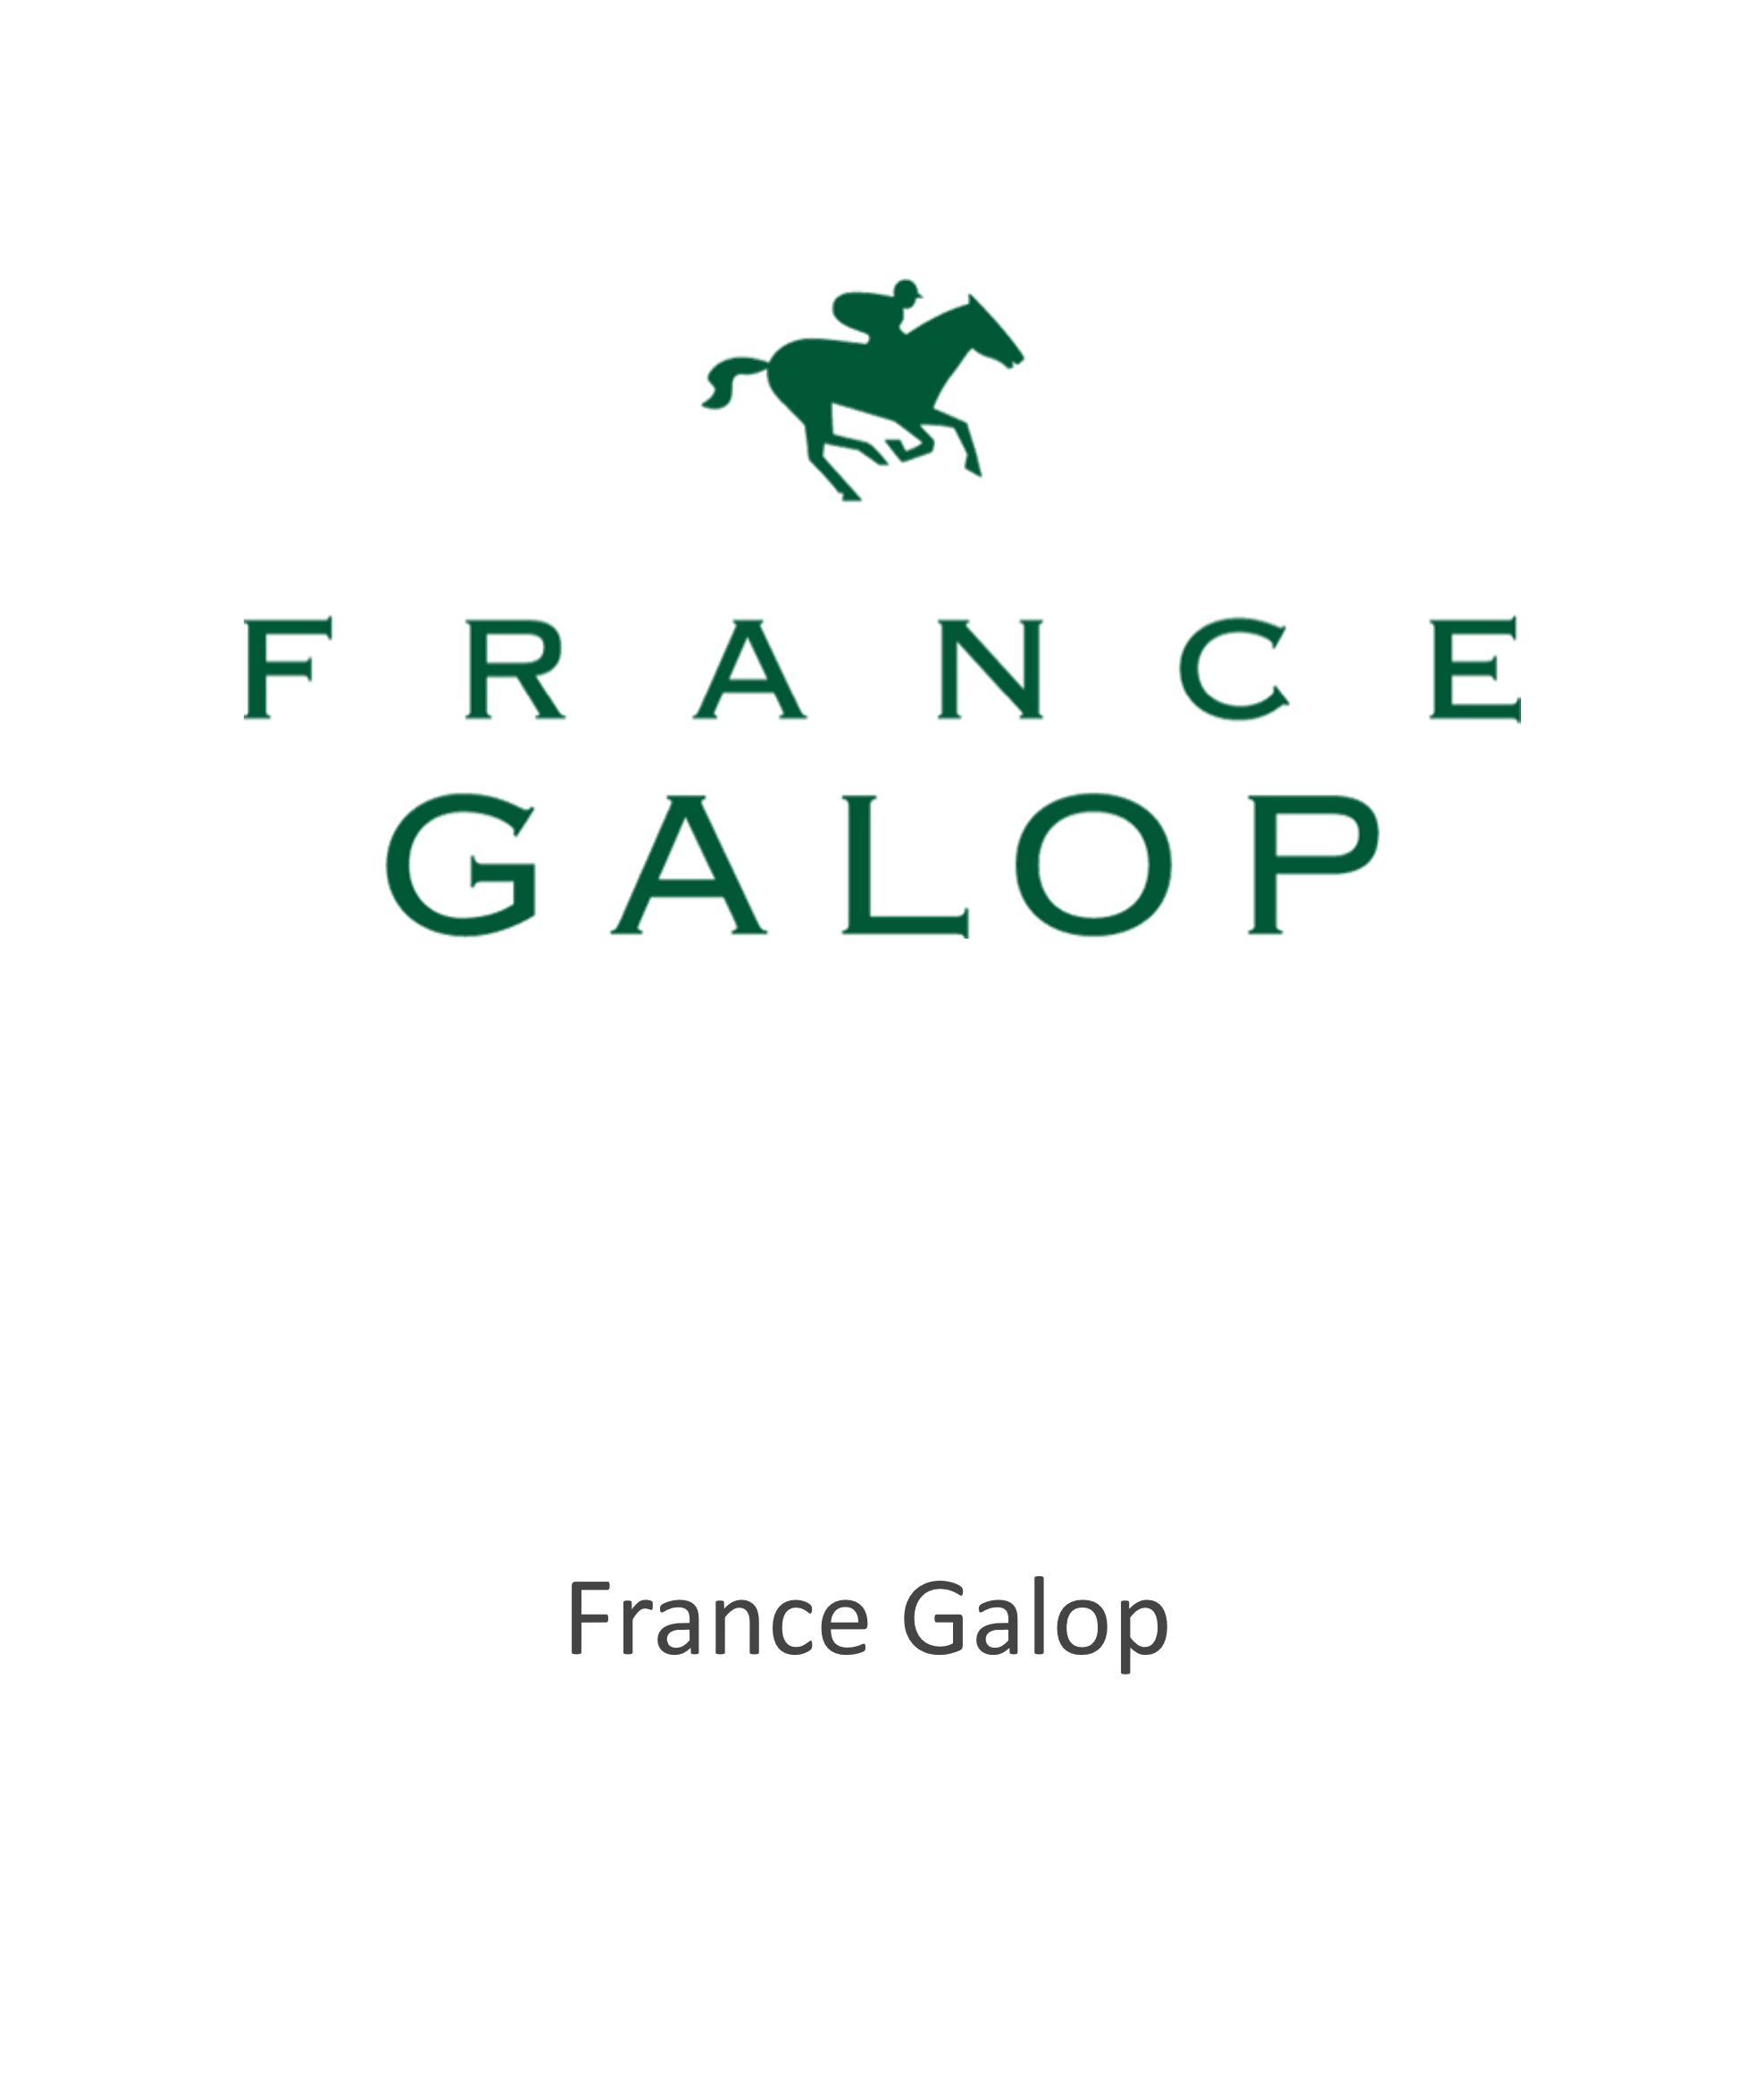 https://mclloyd.com/wp-content/uploads/2021/05/France-Galop-Homepage-v2-1.png